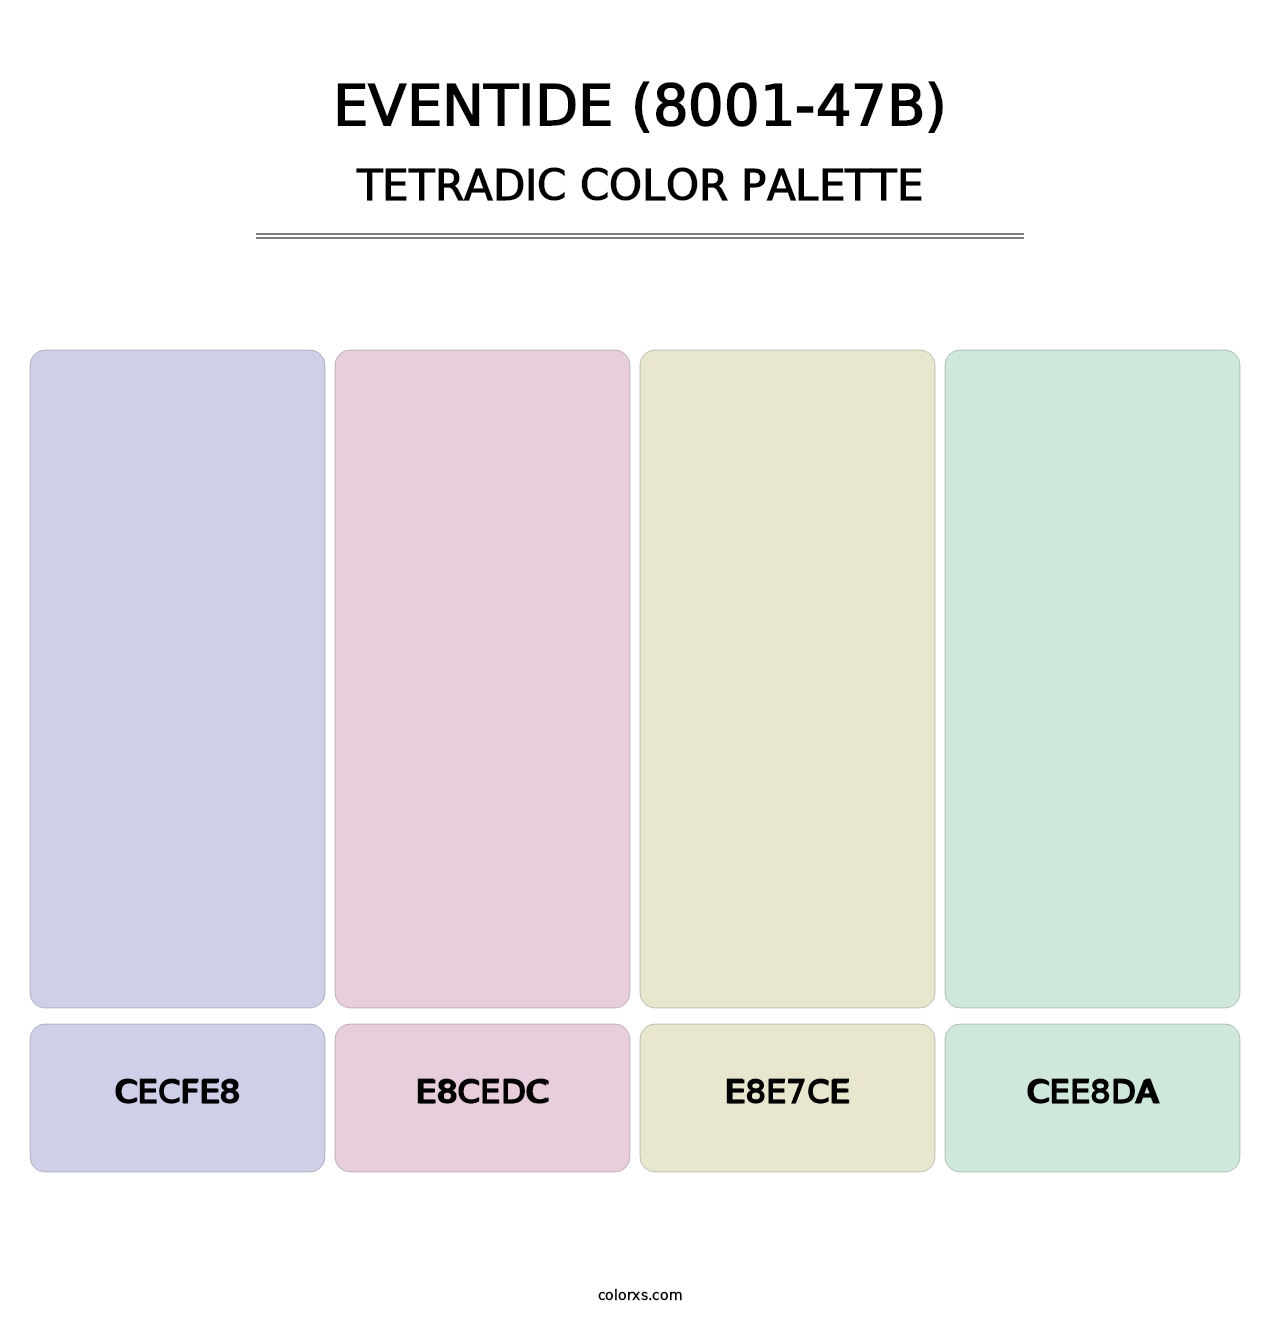 Eventide (8001-47B) - Tetradic Color Palette